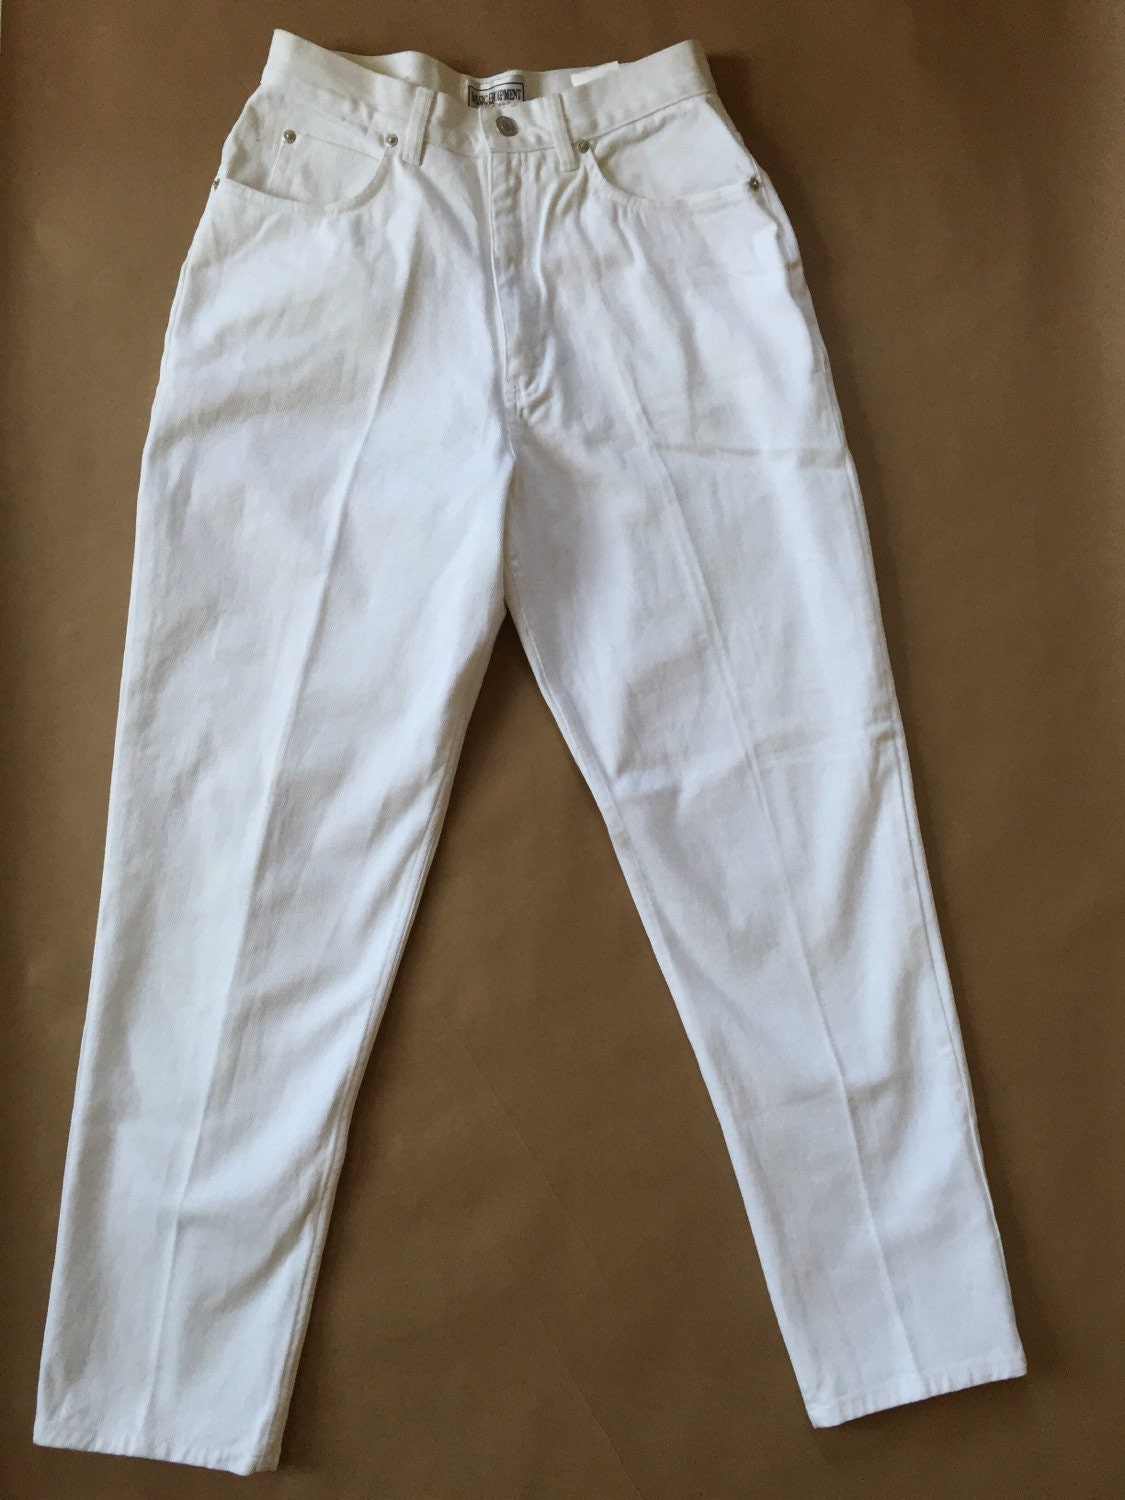 vintage 1980s high-rise white wash jeans / by AdrianAndOlgaCompany